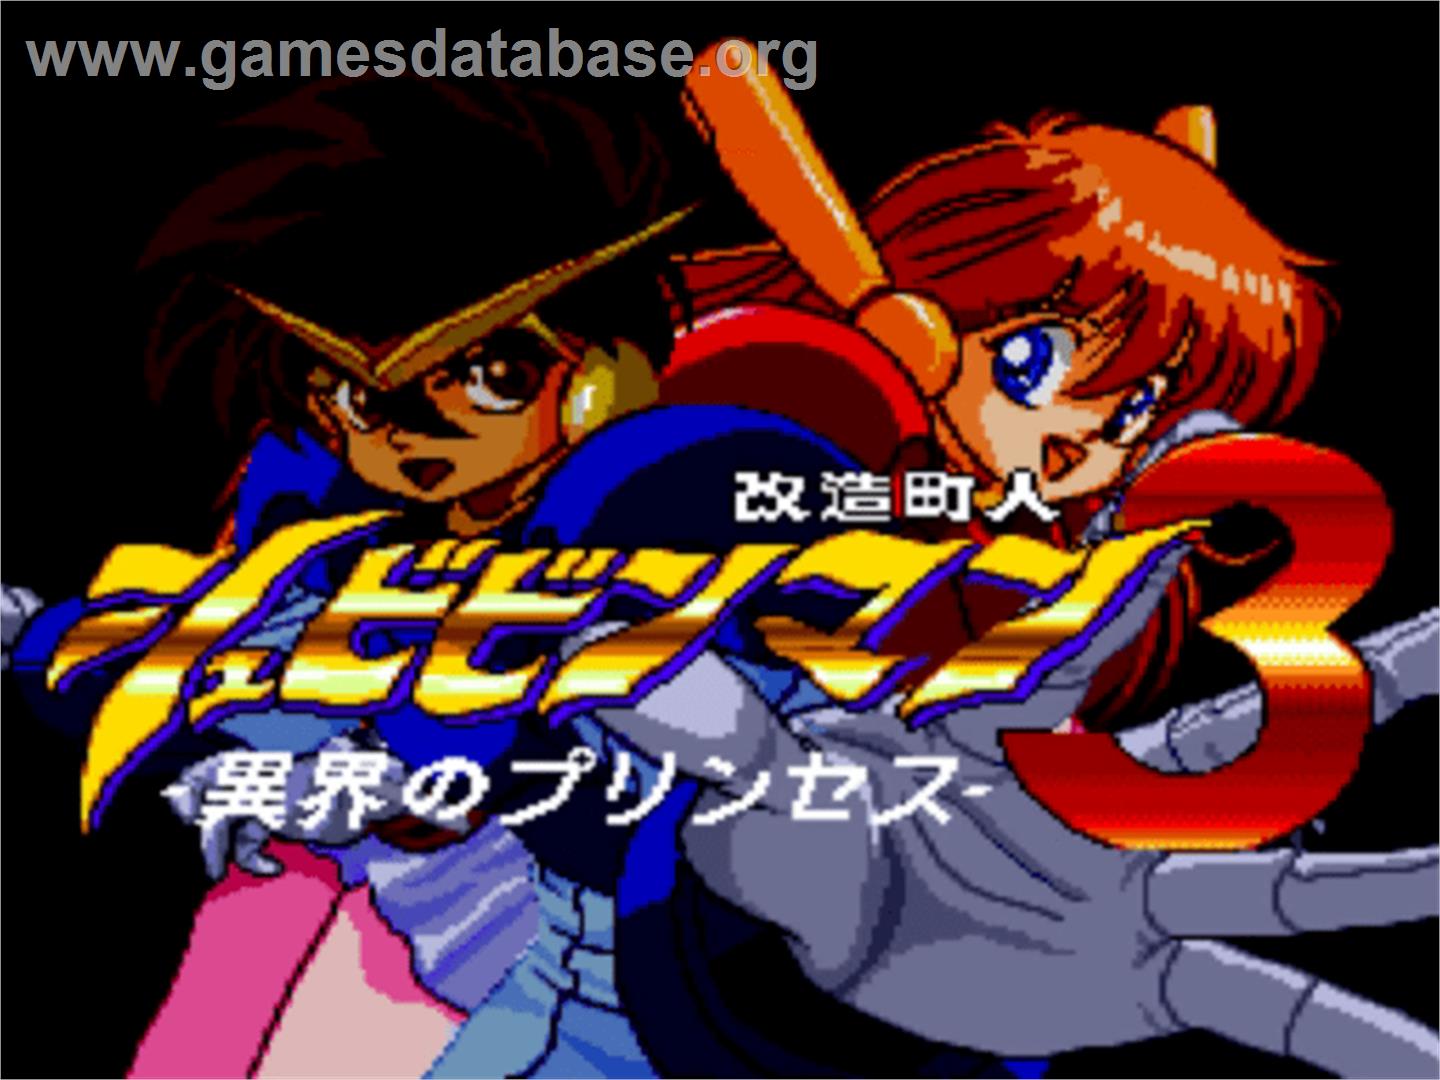 Kaizou Choujin Shubibinman 3: Ikai no Princess - NEC PC Engine CD - Artwork - Title Screen